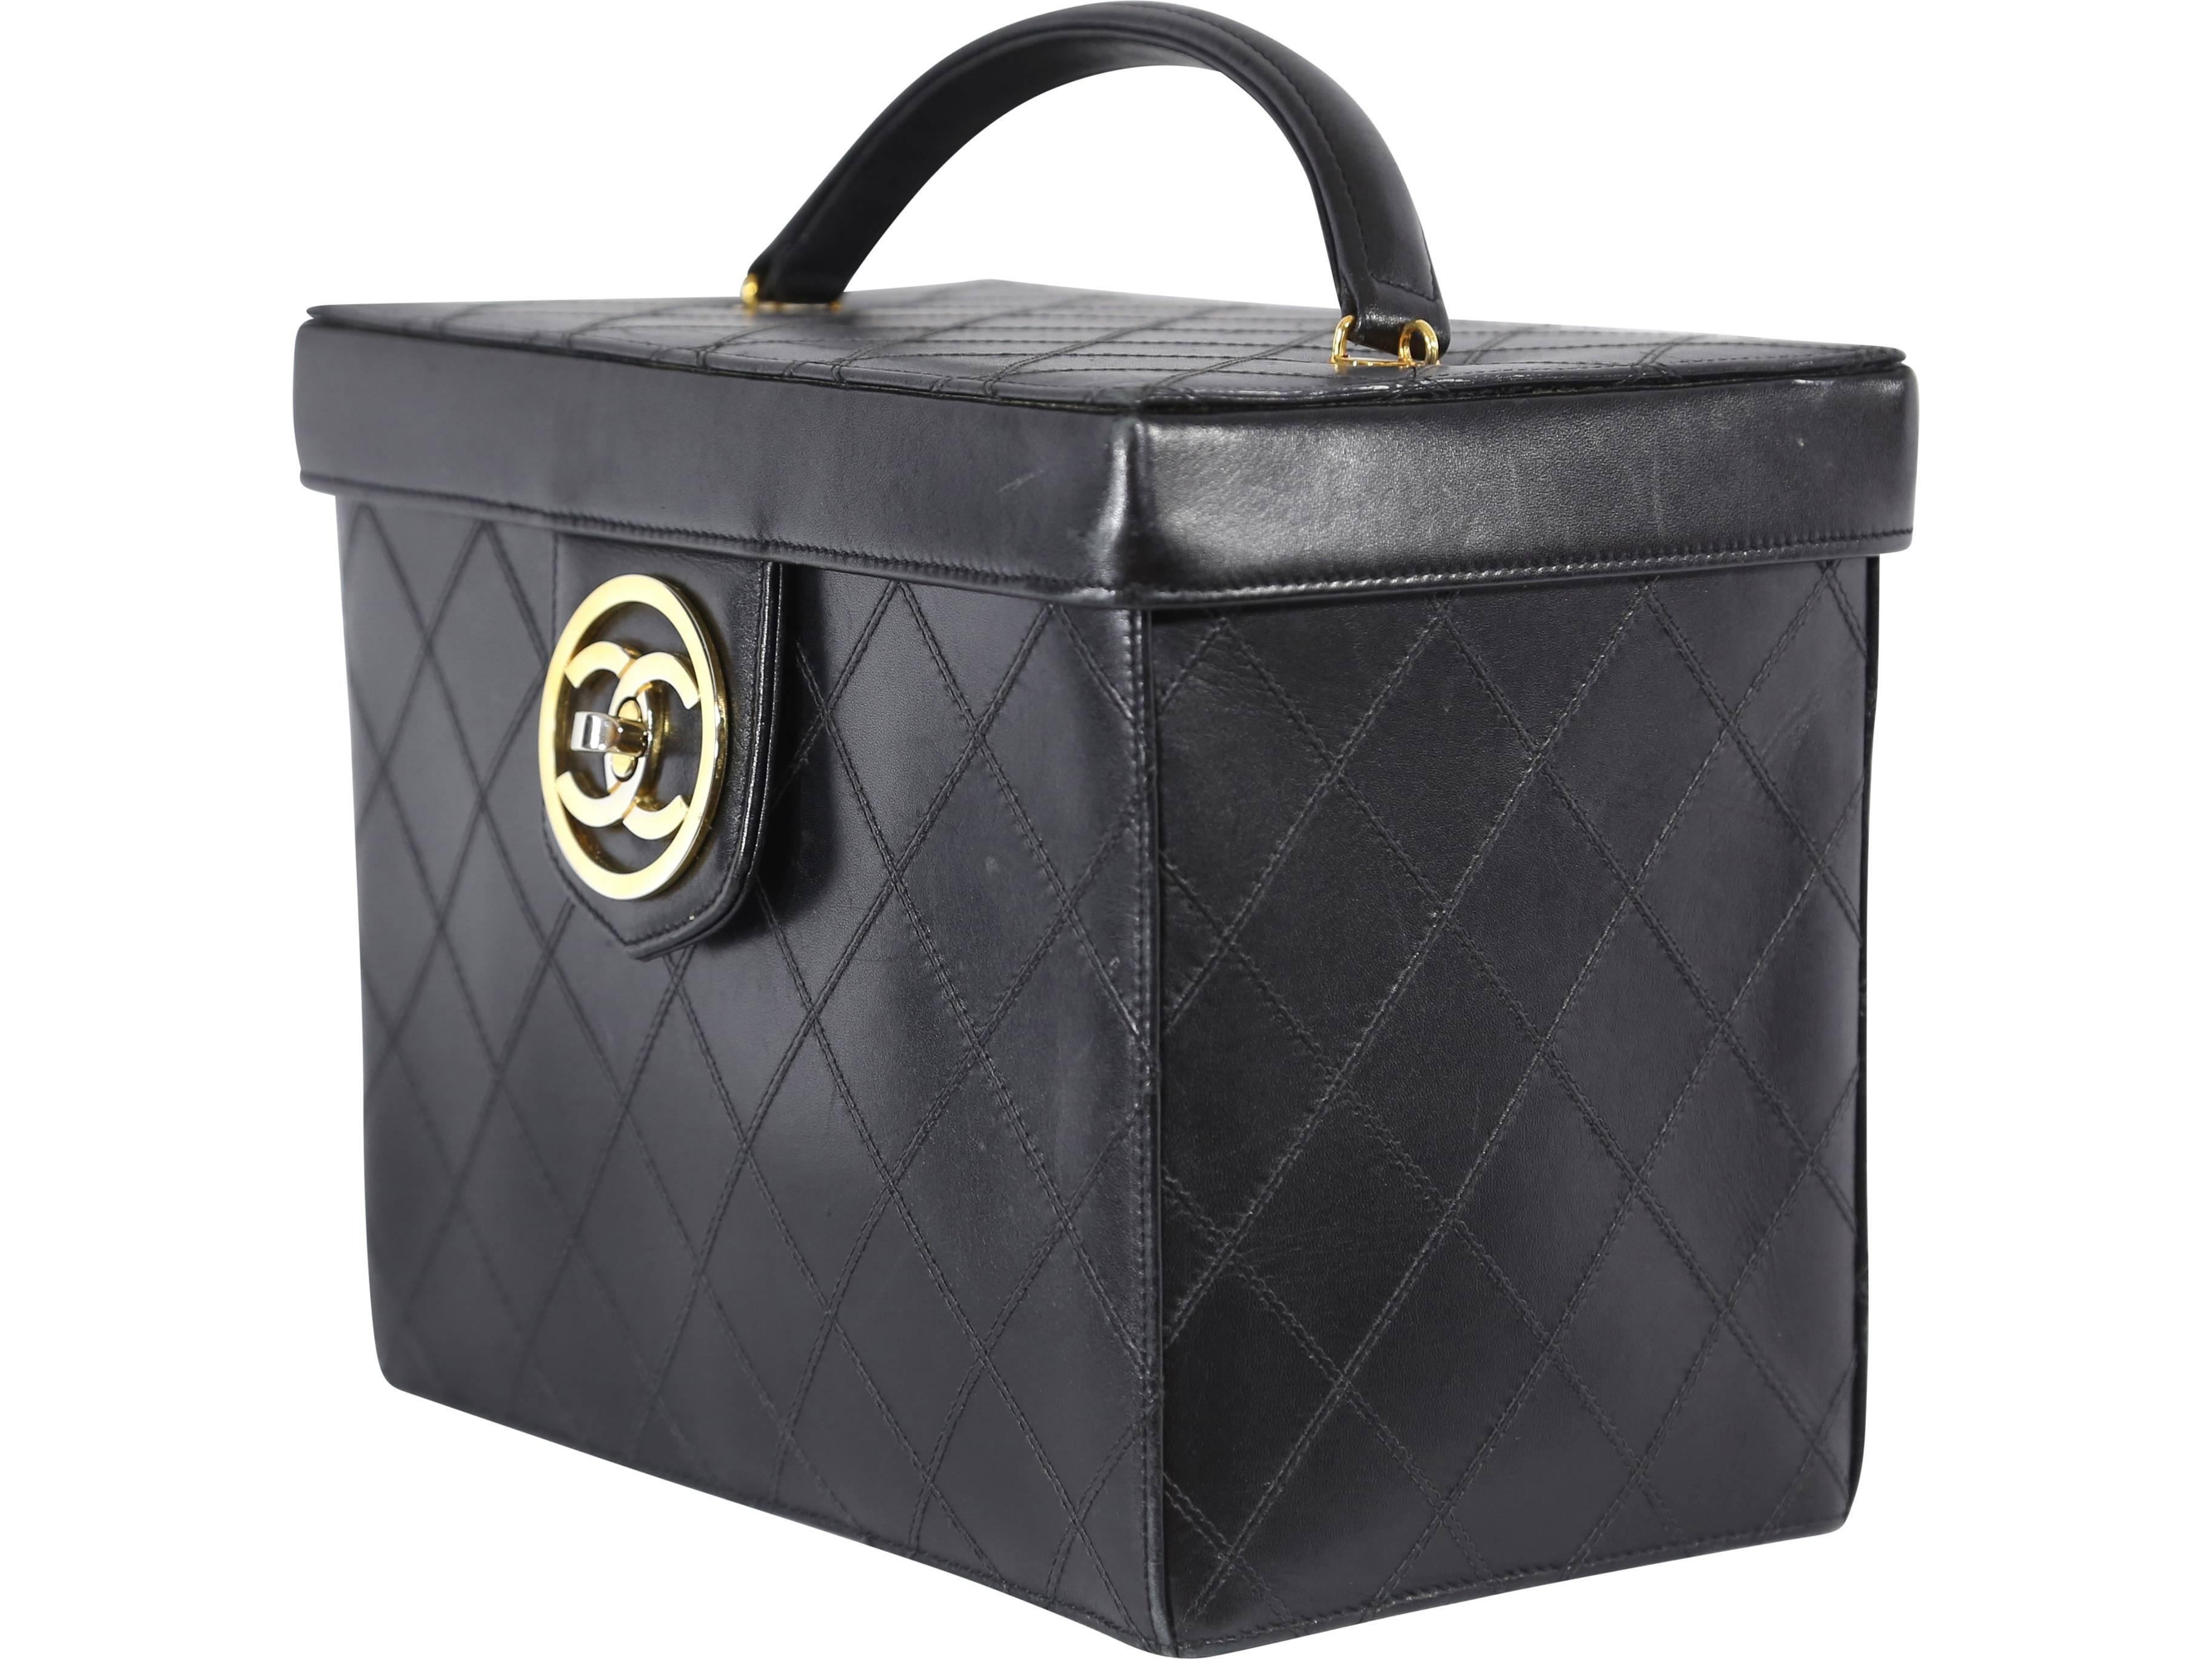 Women's Chanel Black Leather Trunk Case Handbag